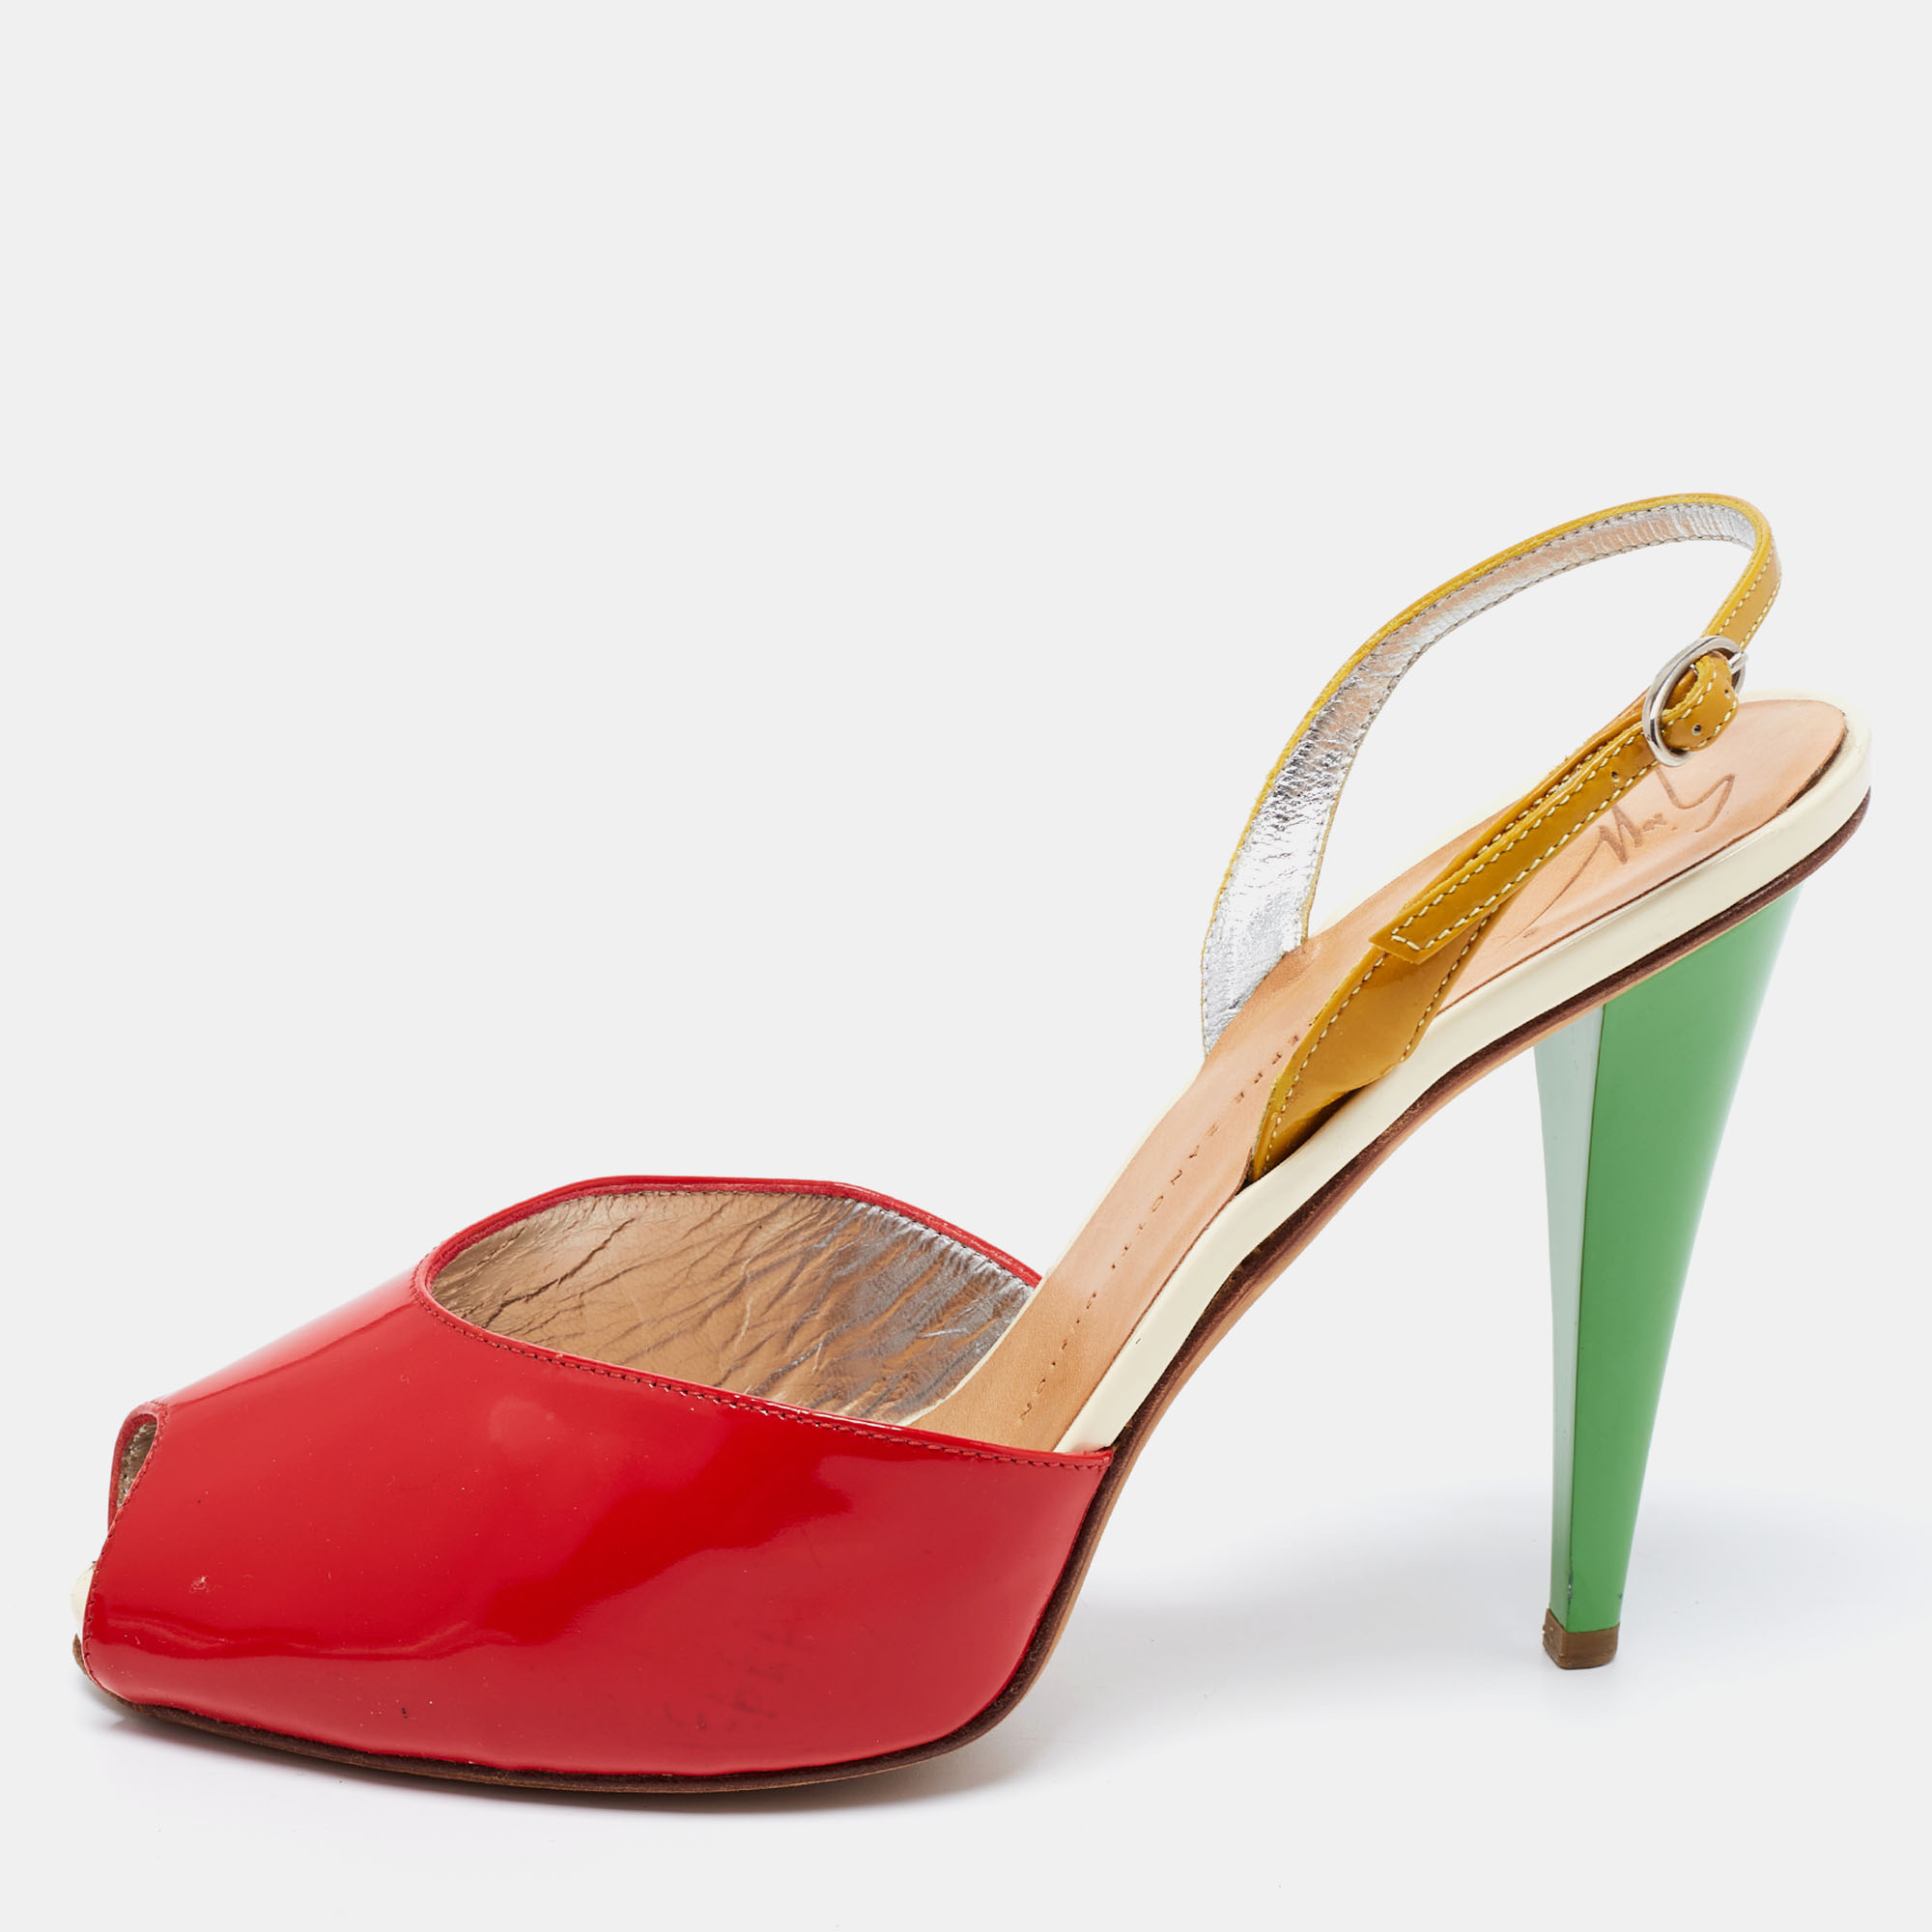 Giuseppe zanotti tri-color patent leather peep toe slingback sandals size 40